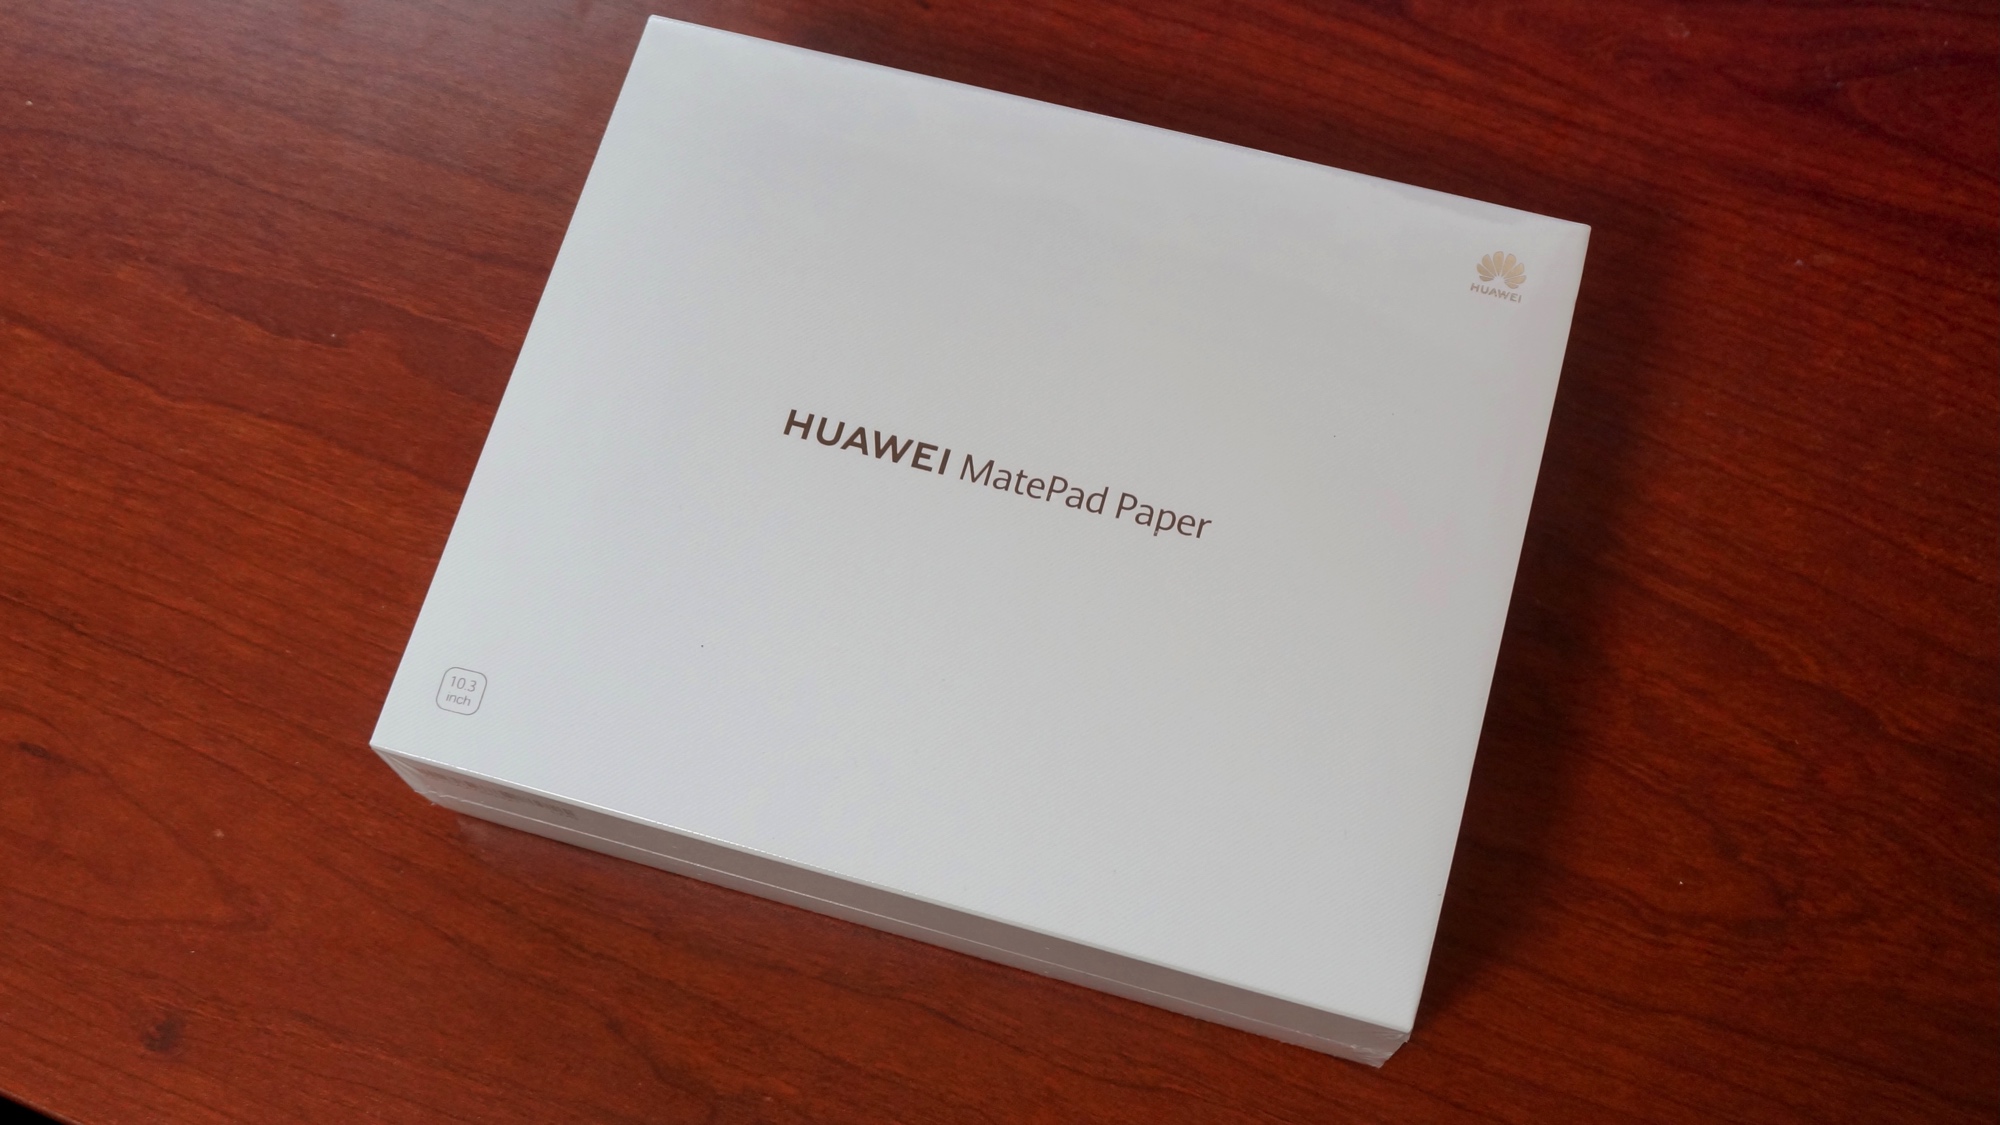 HUAWEI MatePad Paper Box